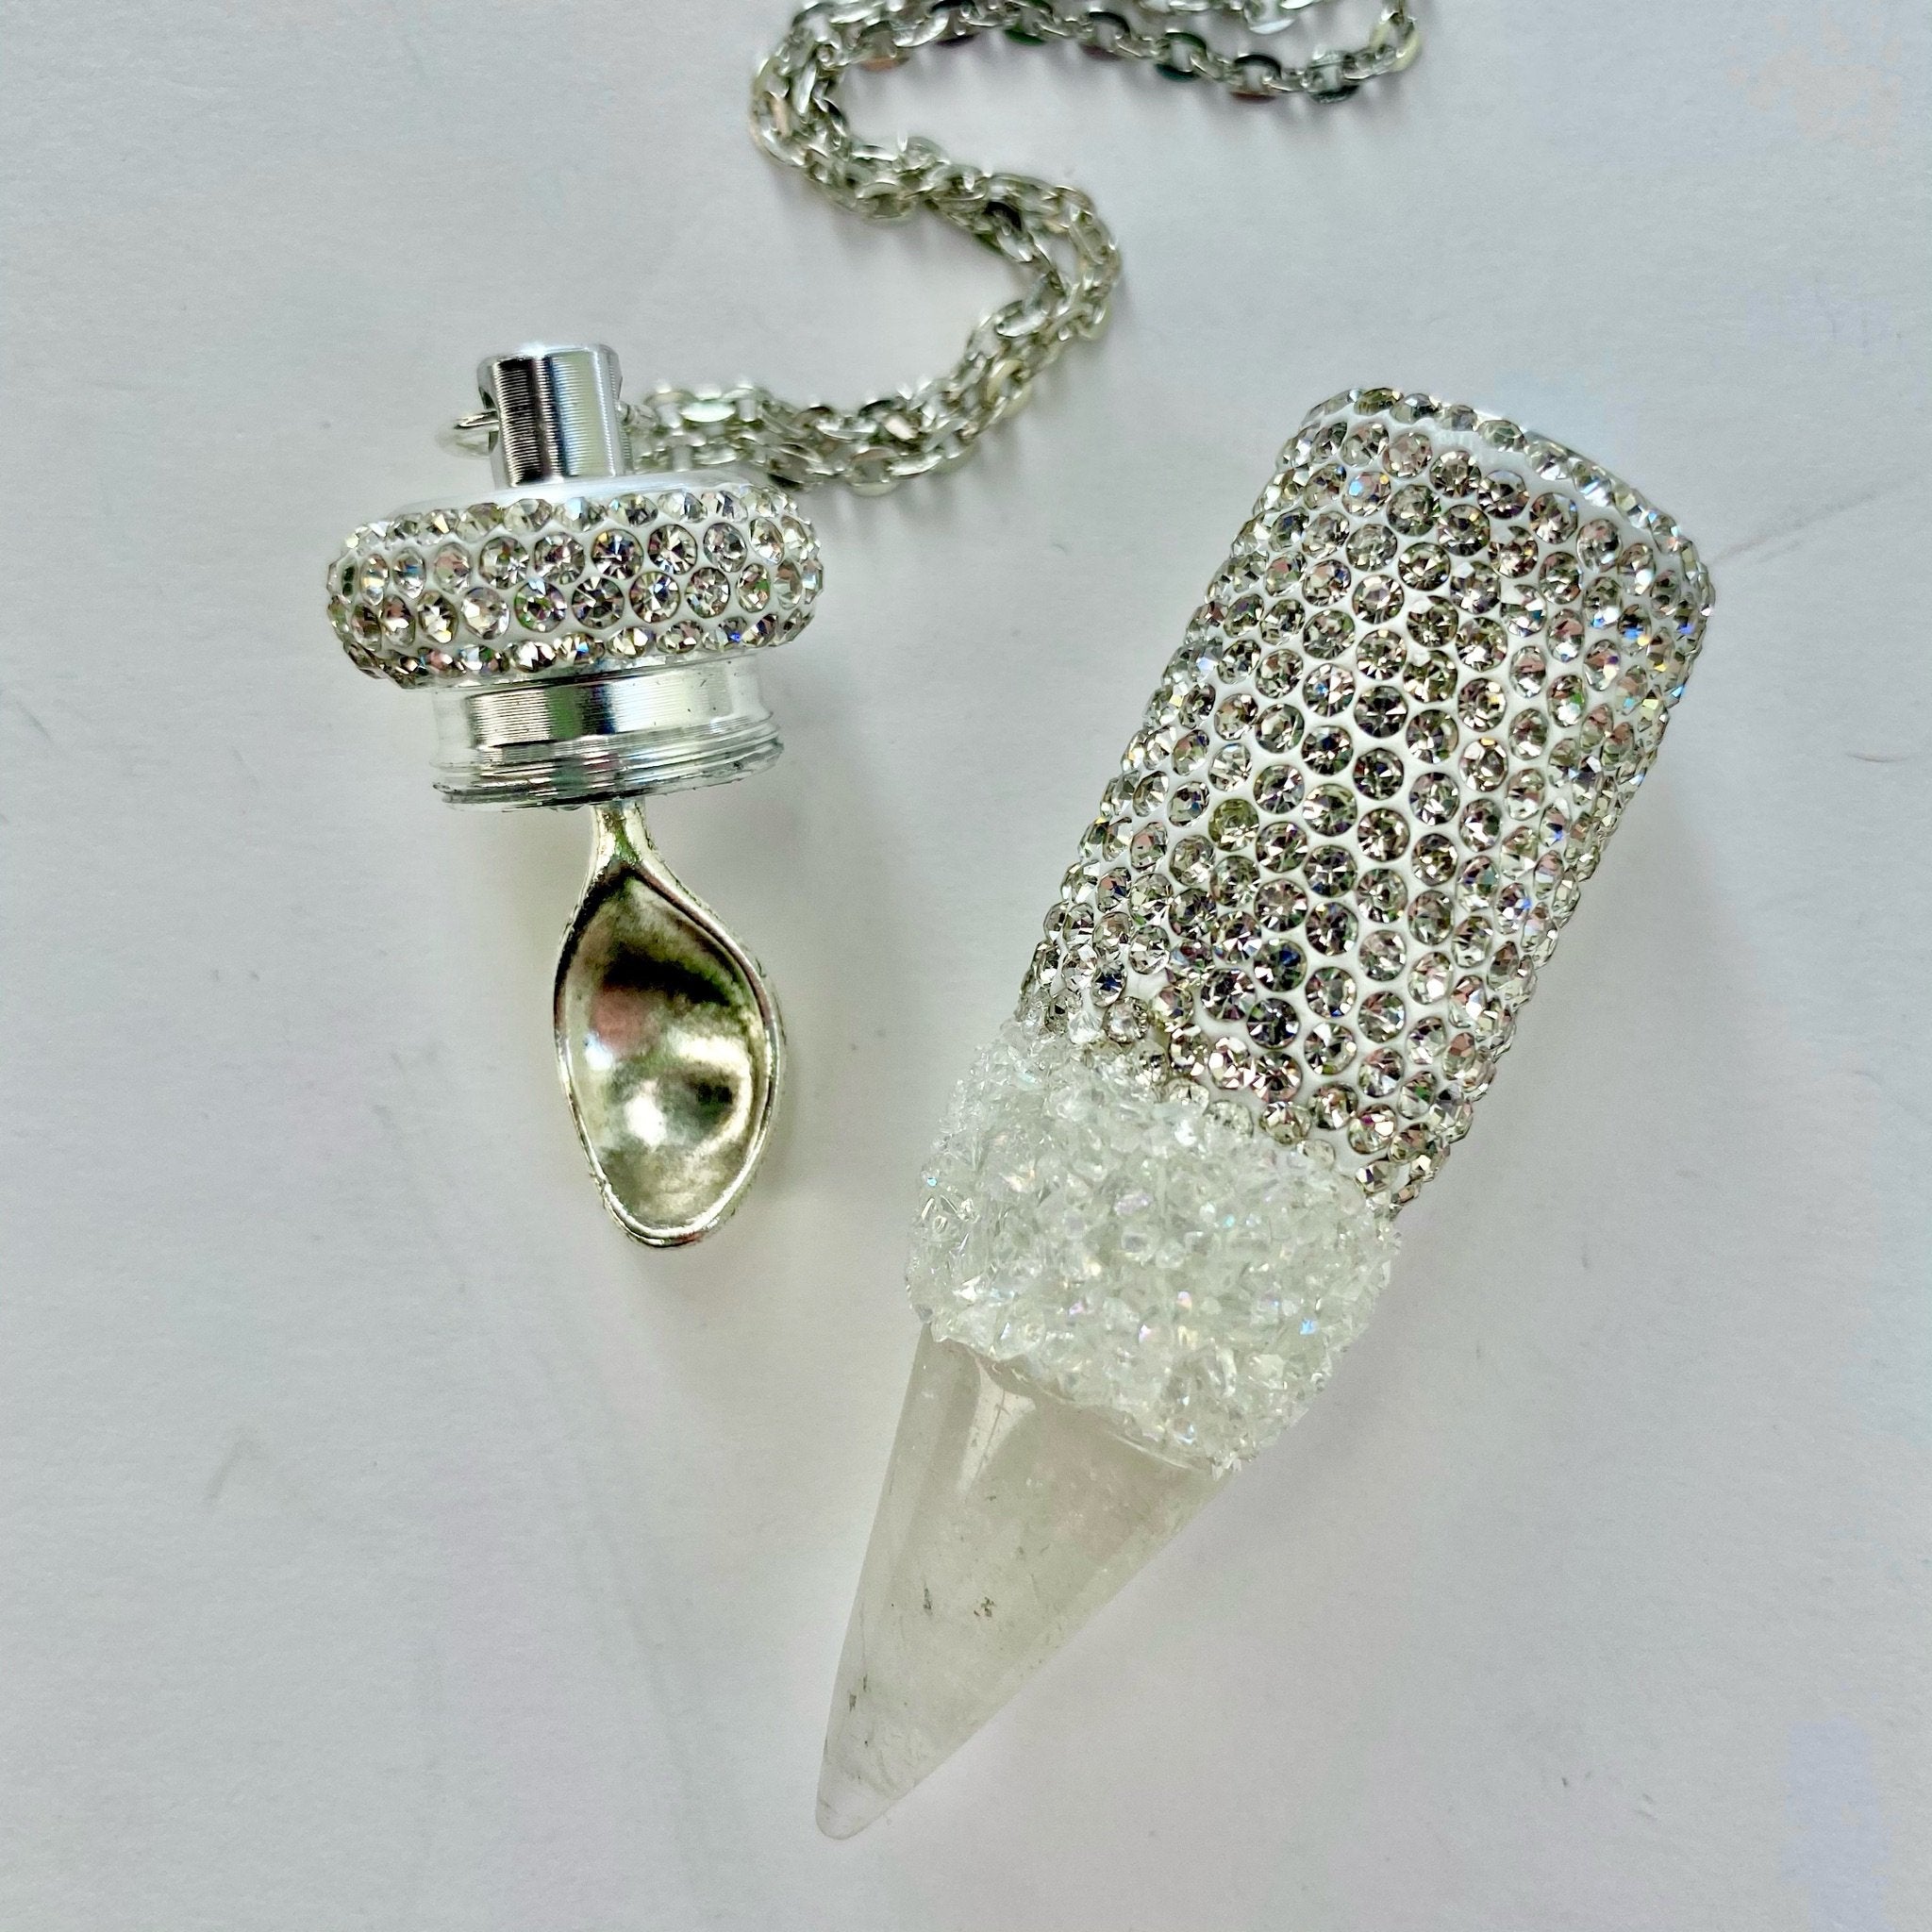 Bottle necklace stash necklace spoon necklace small bottle